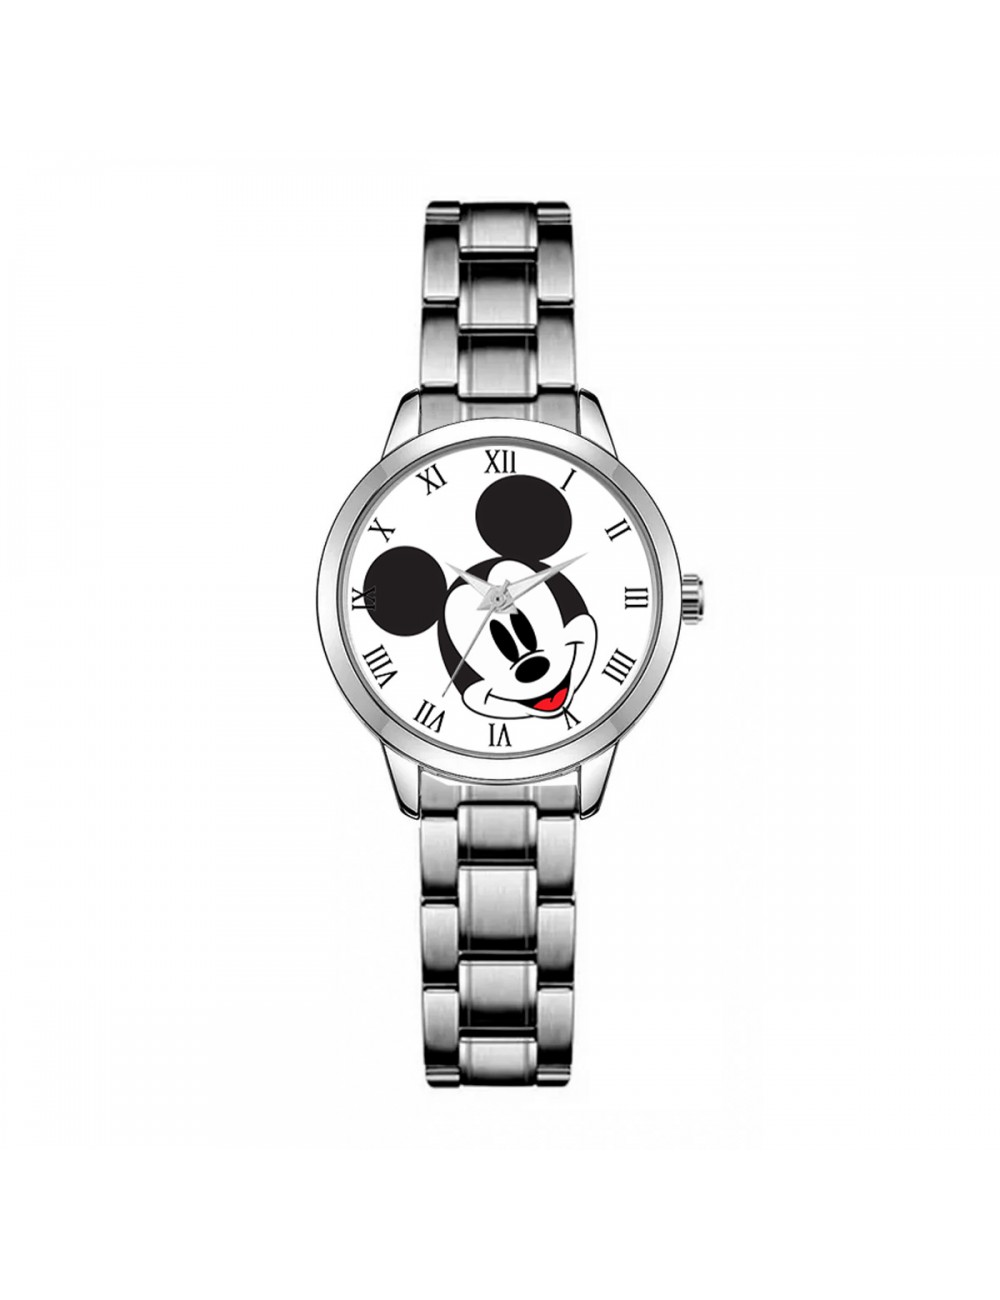 Reloj Mickey Mouse 59,900.00